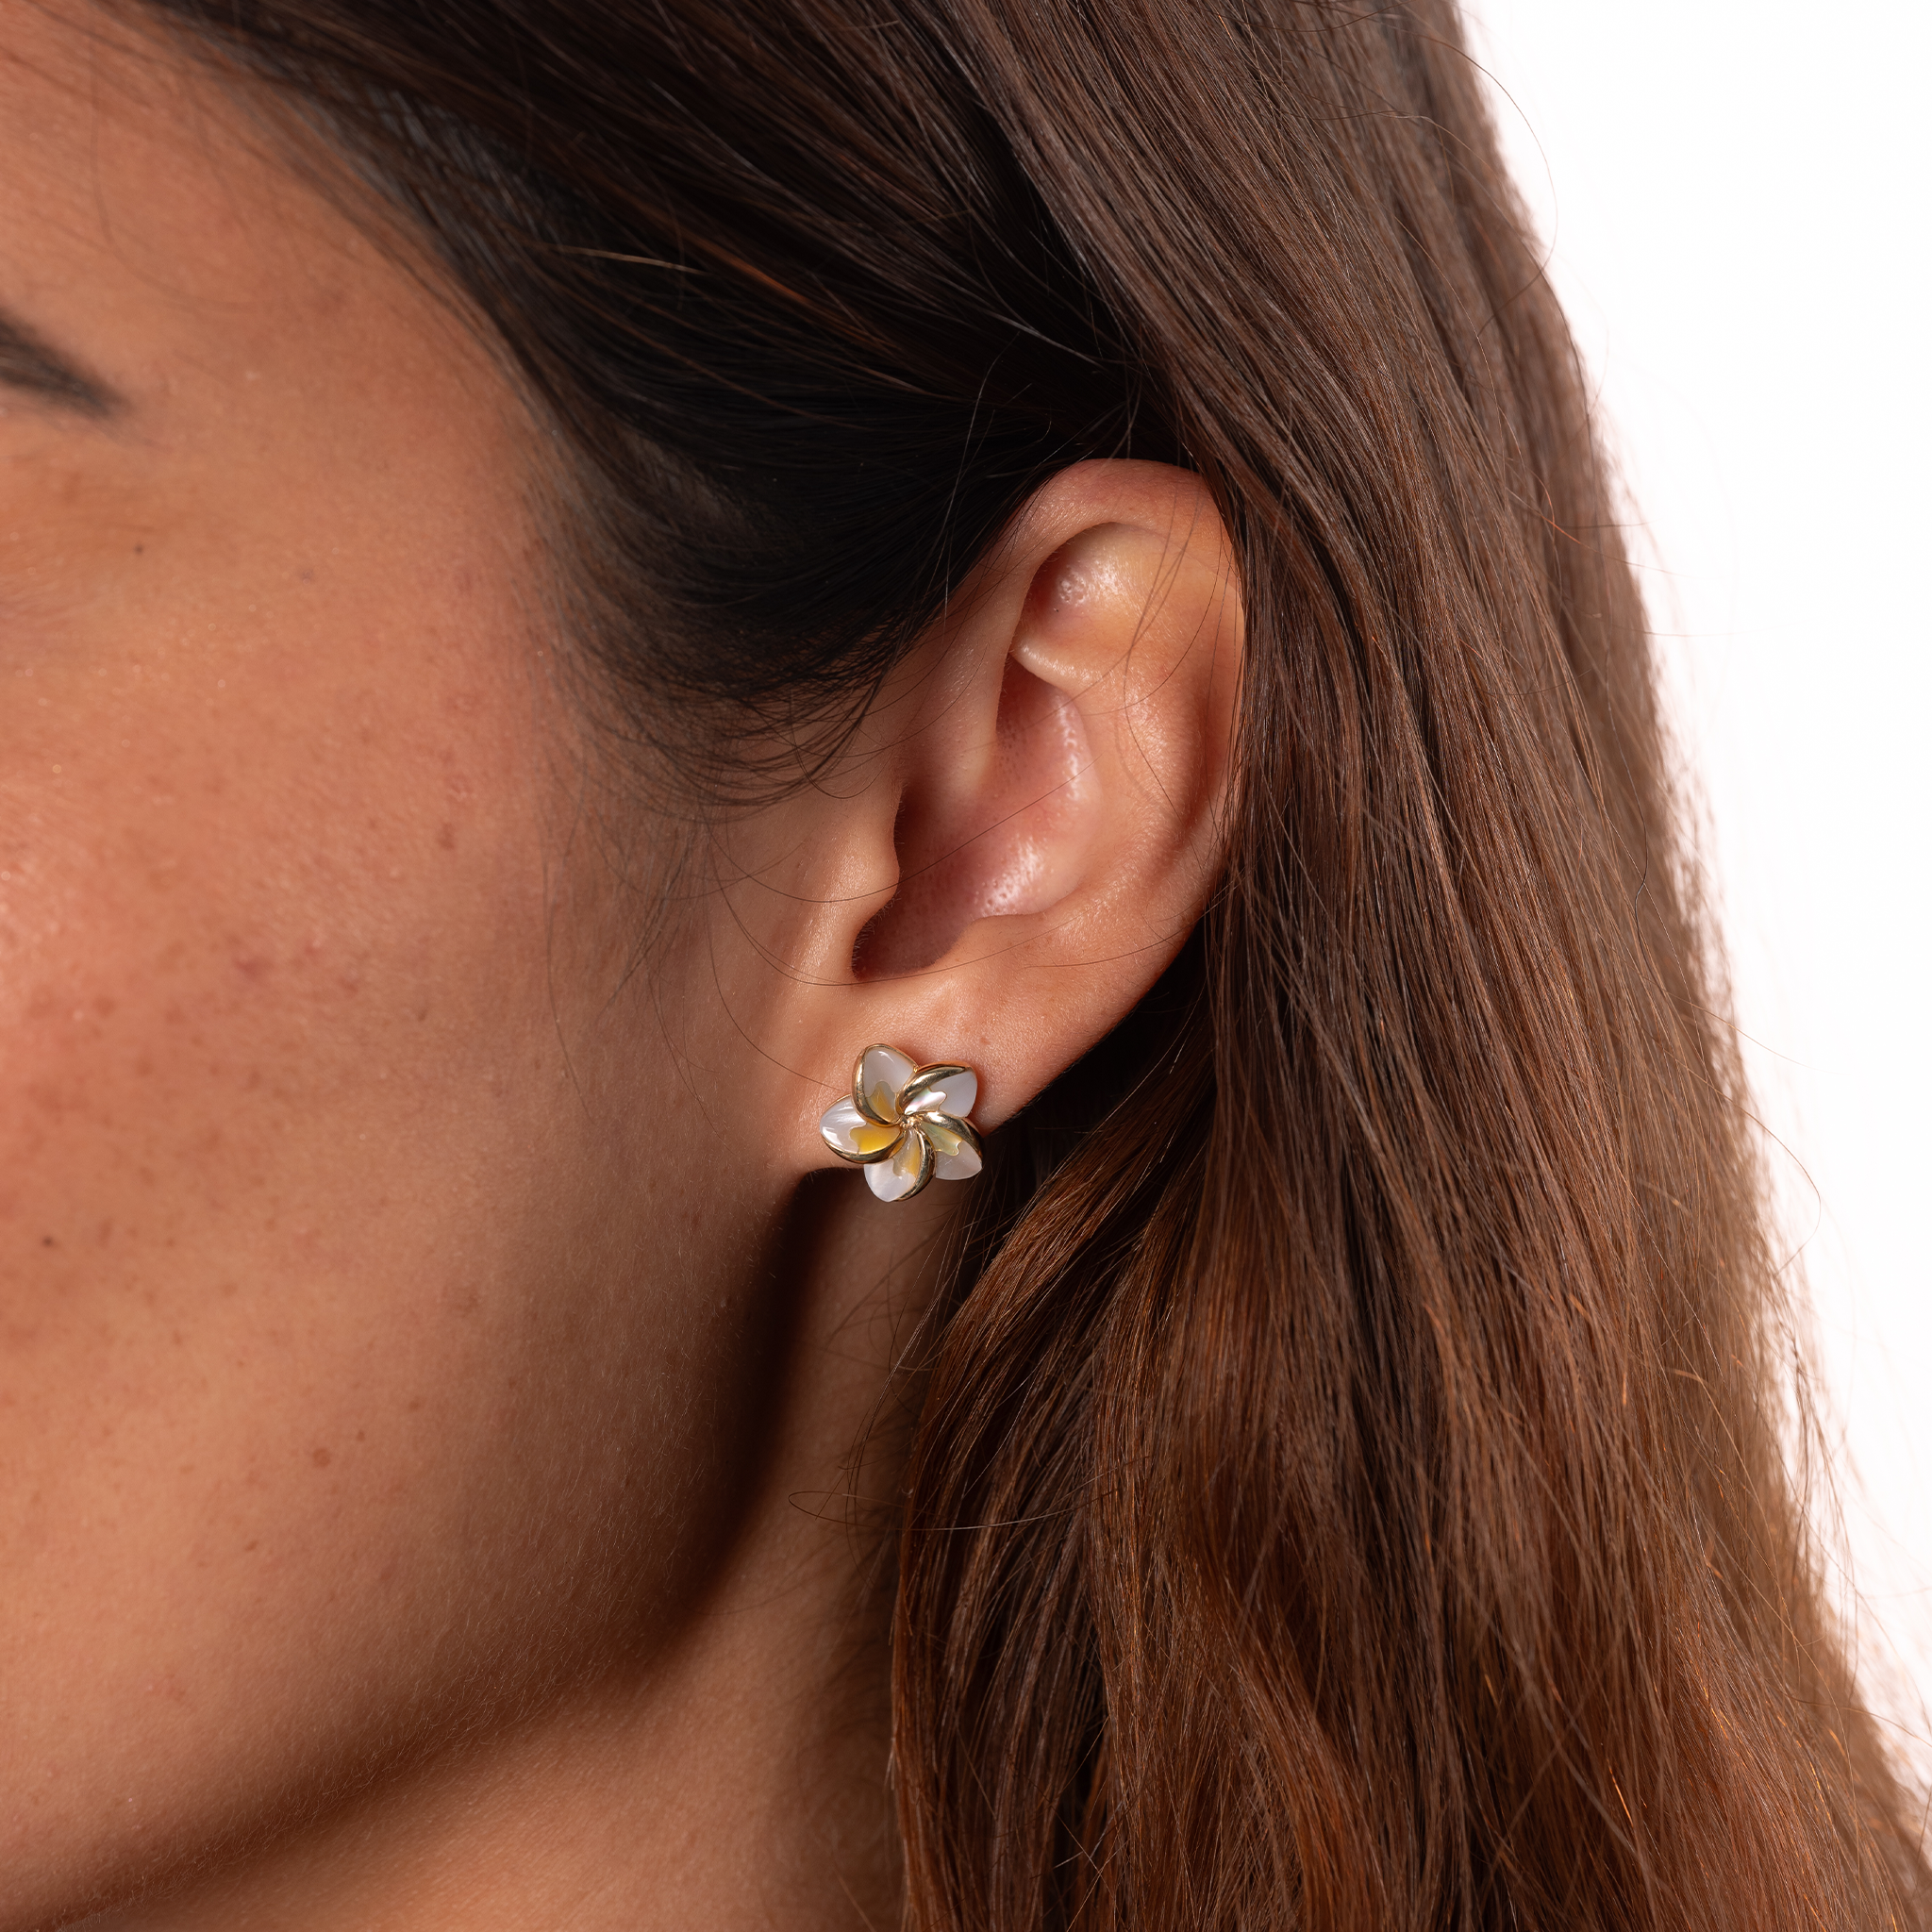 Plumeria Mother of Pearl Earrings in Gold - 13mm